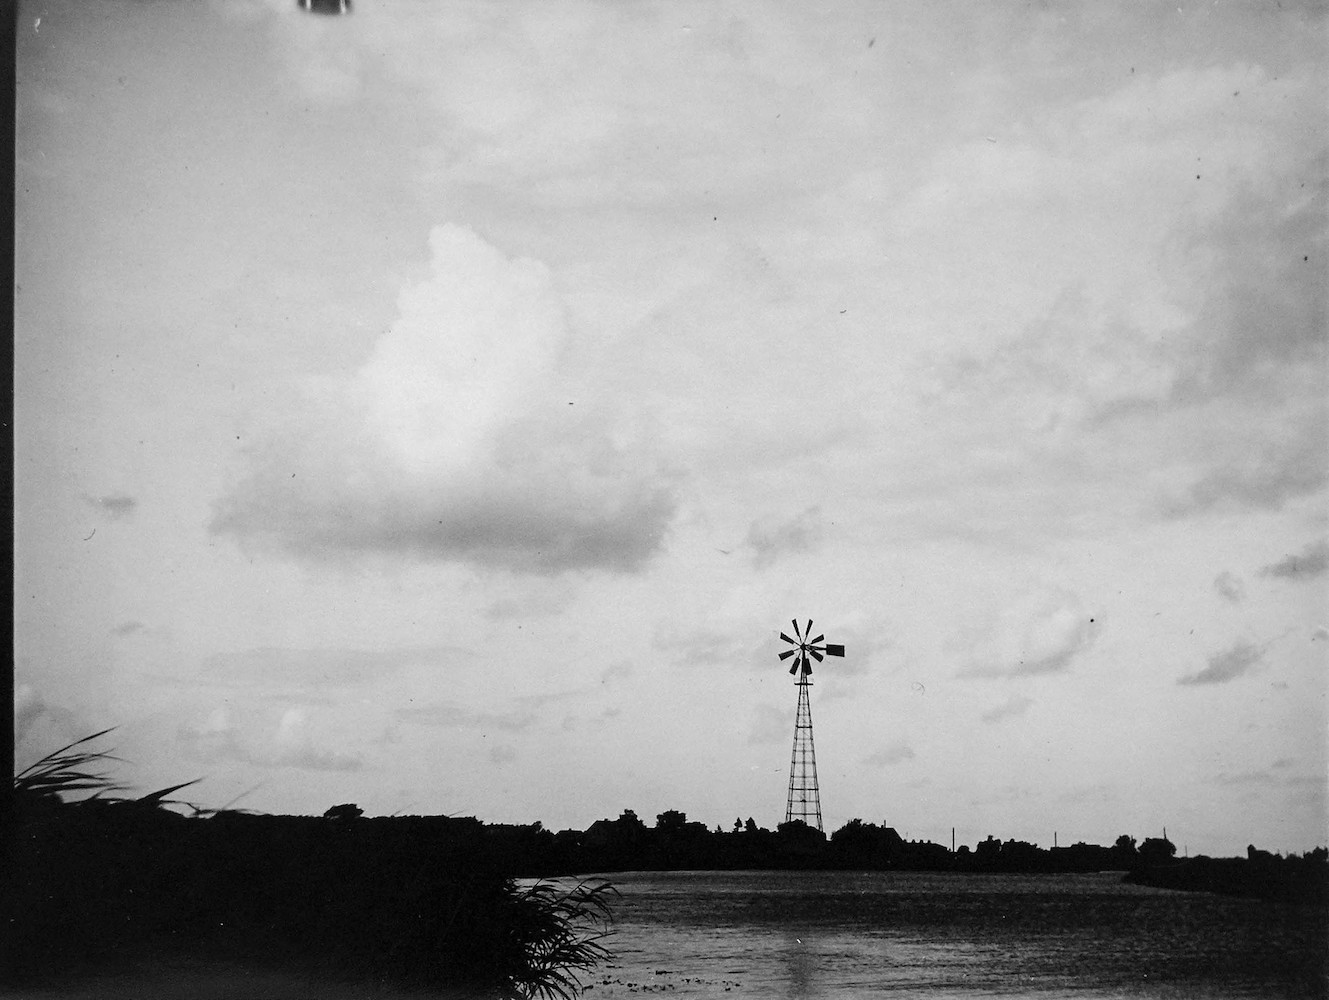 Windmill by Water (Rega delta)